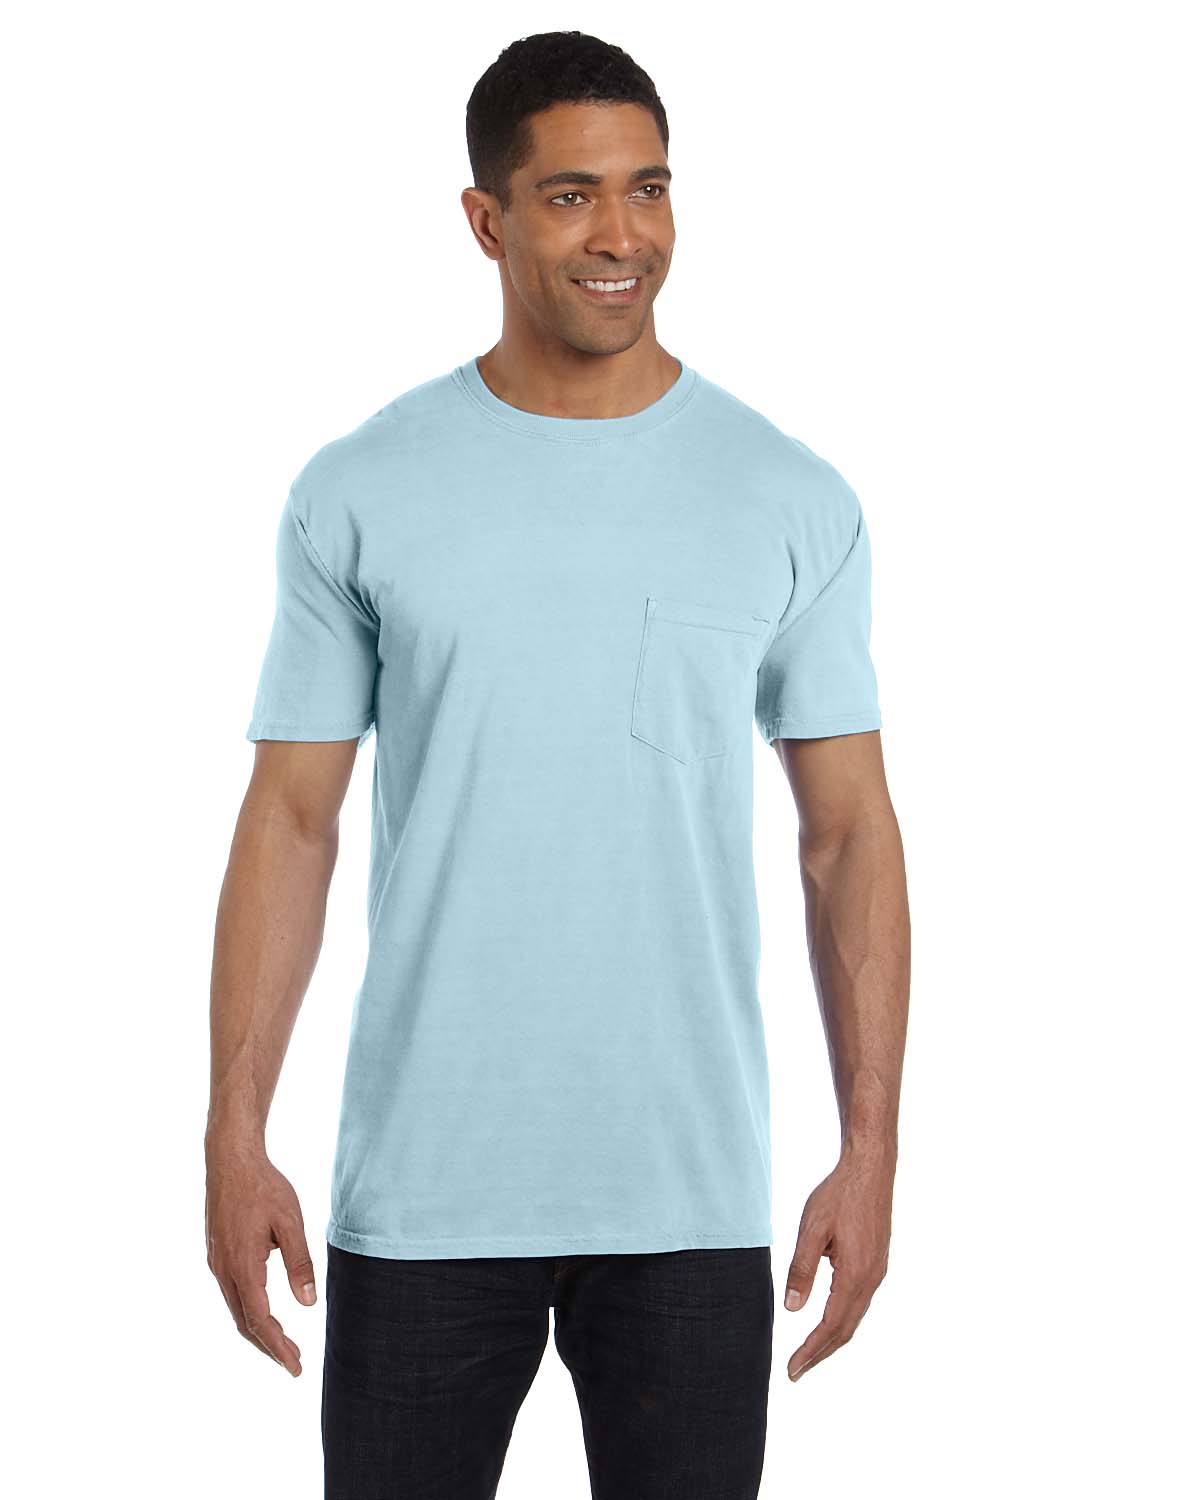 Comfort Colors 6.1 oz. Garment Dyed Pocket T-Shirt S-3XL M-6030CC | eBay